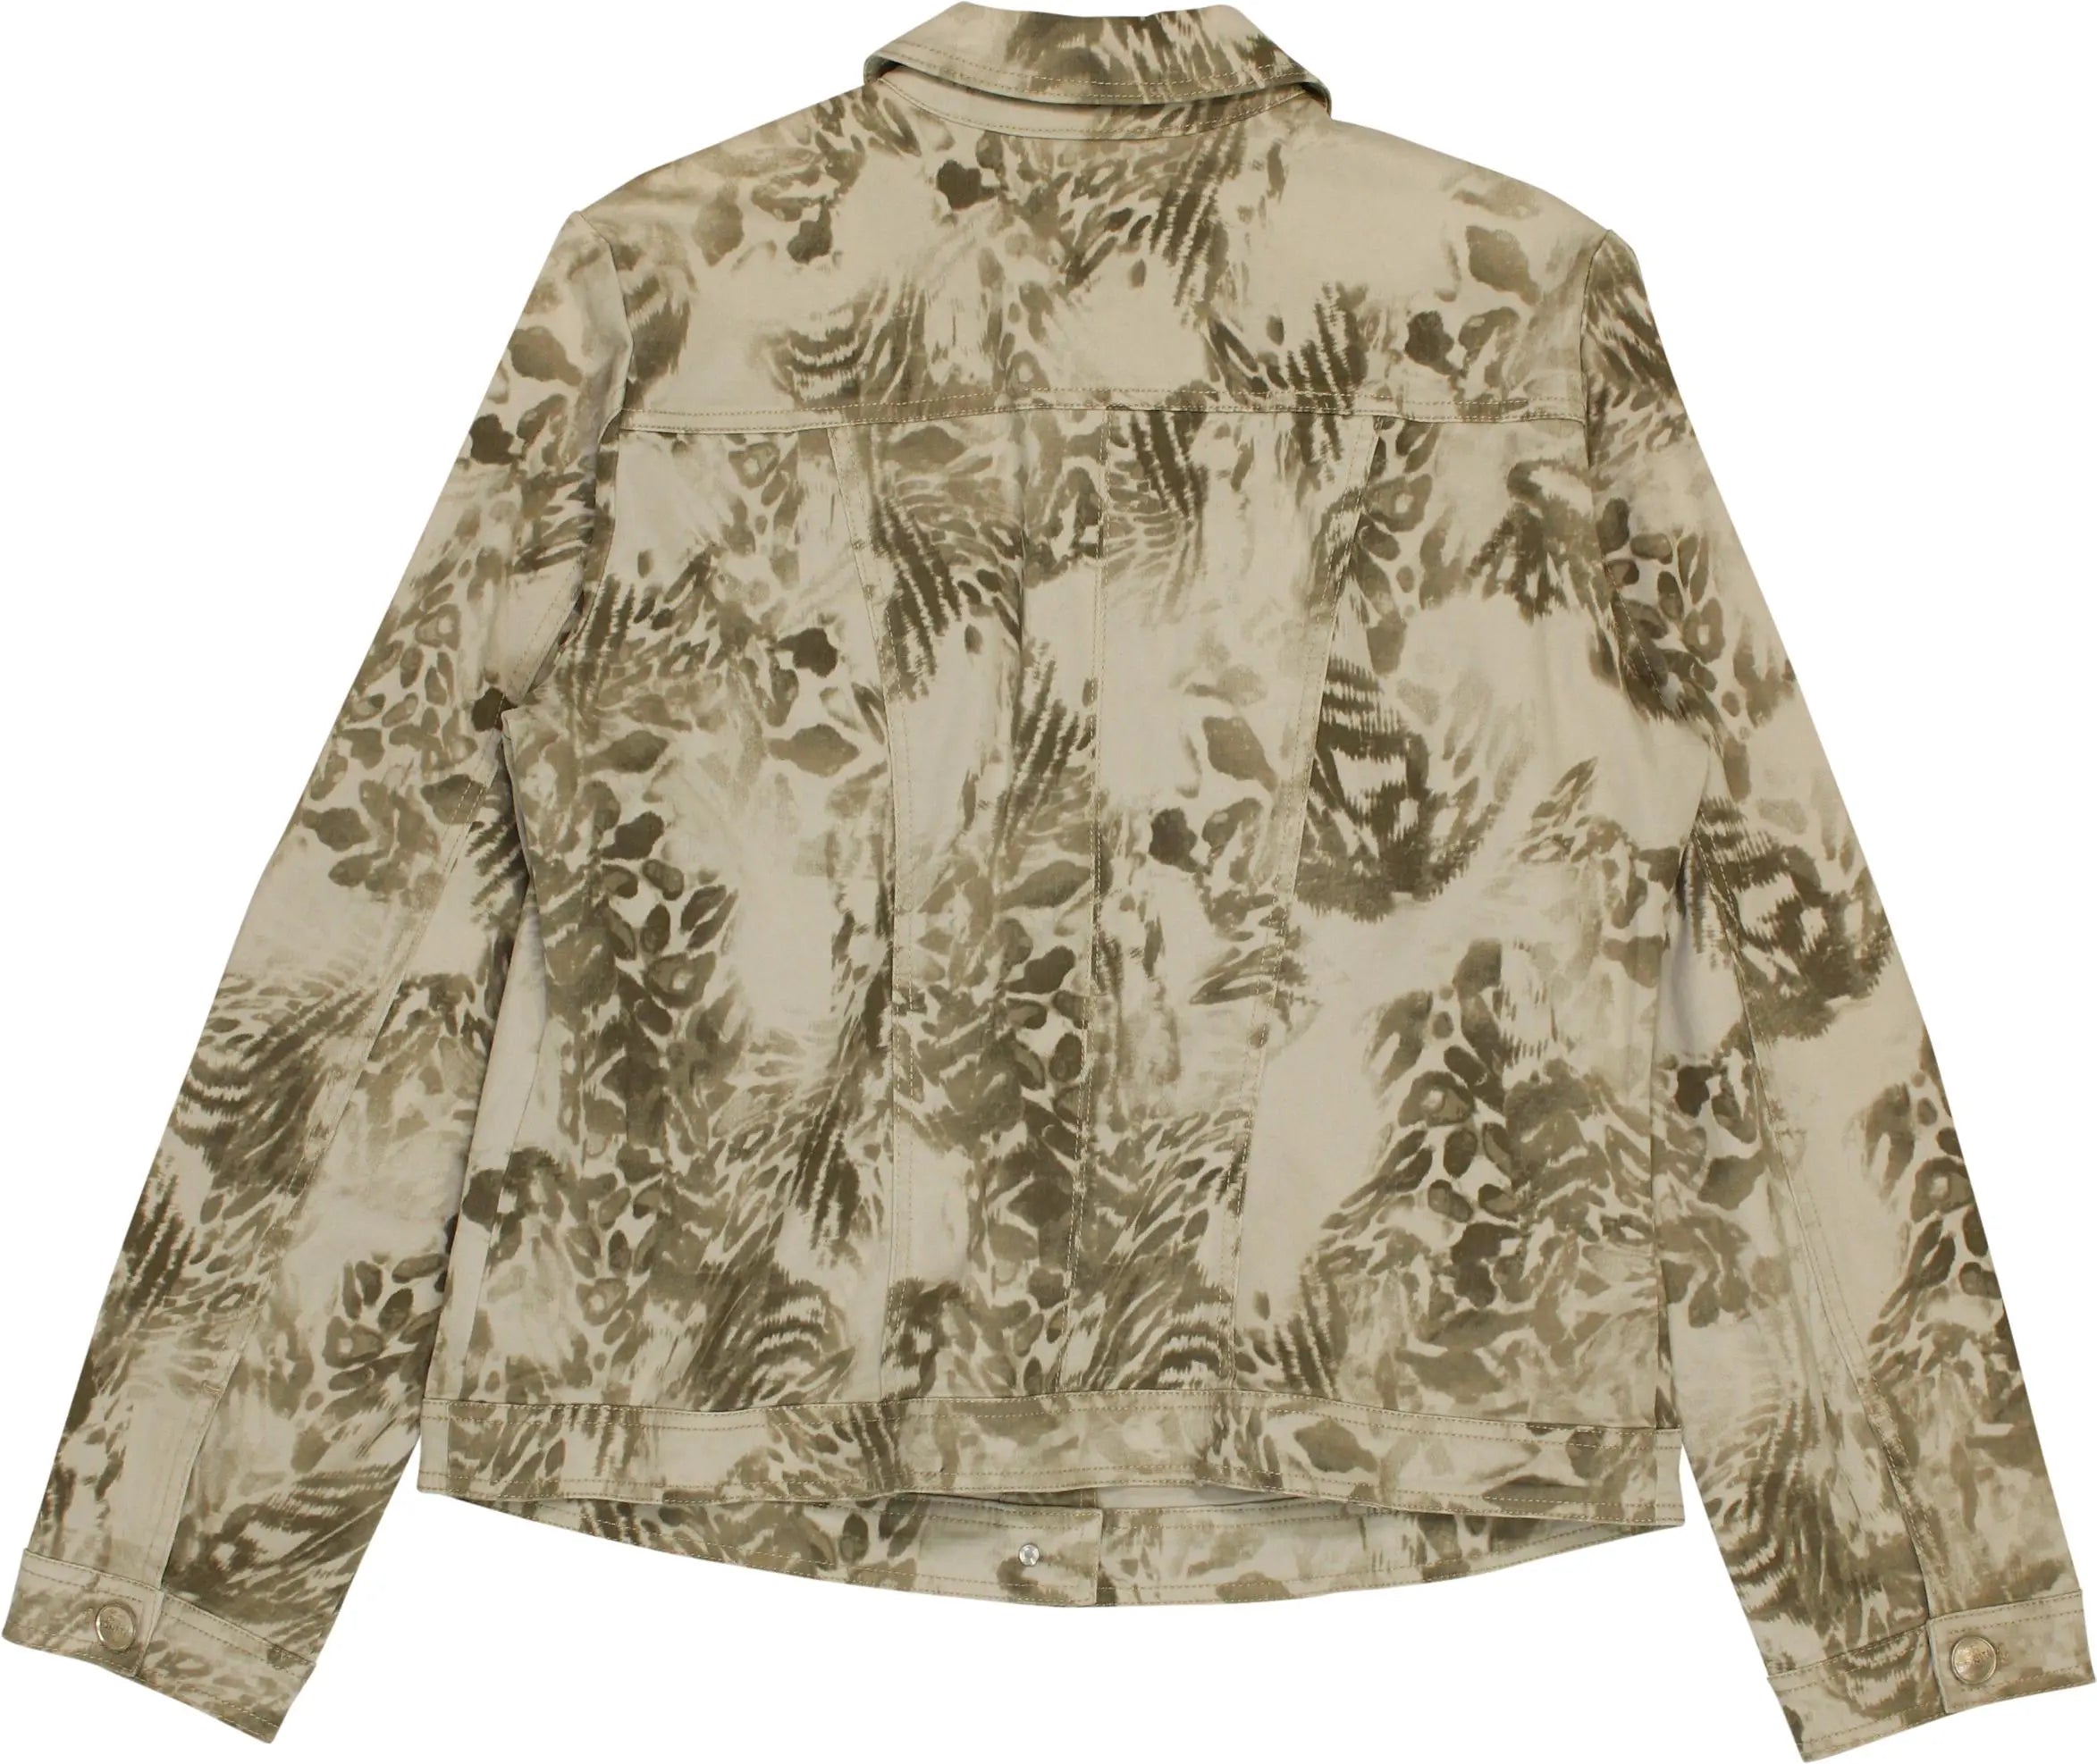 Bonita - Jacket- ThriftTale.com - Vintage and second handclothing